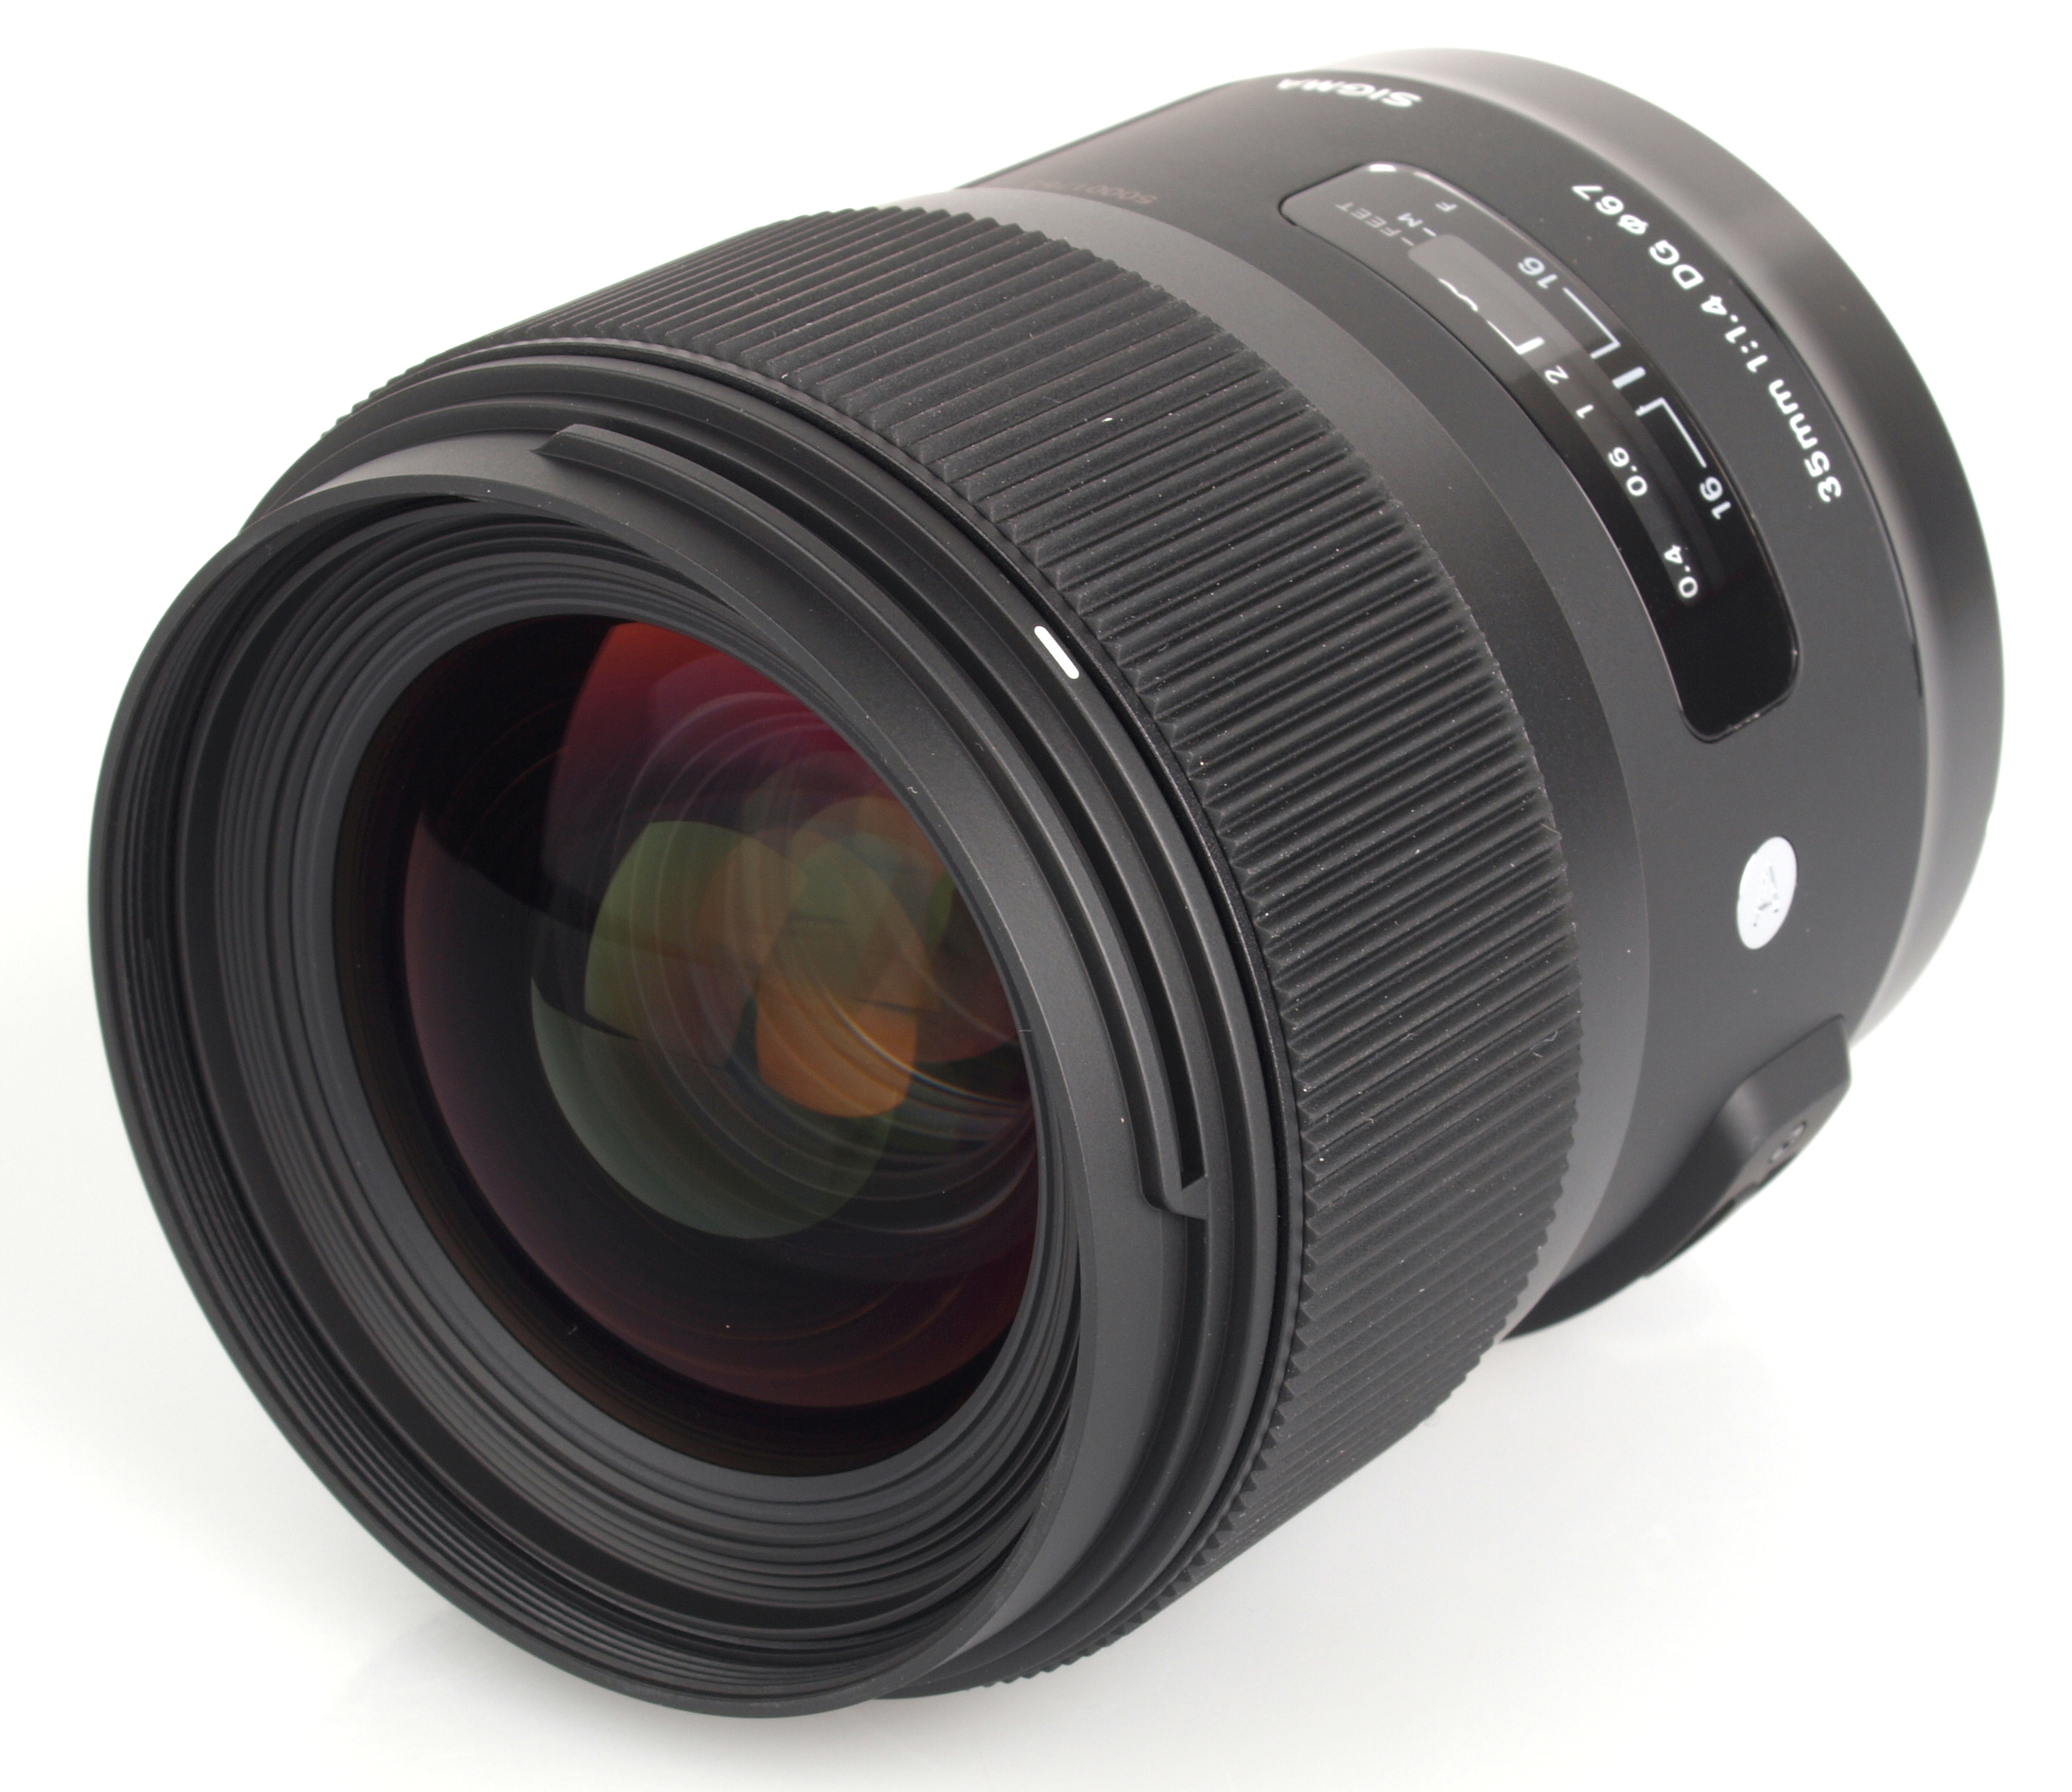 Lens 35mm f / 1.4 DG HSM